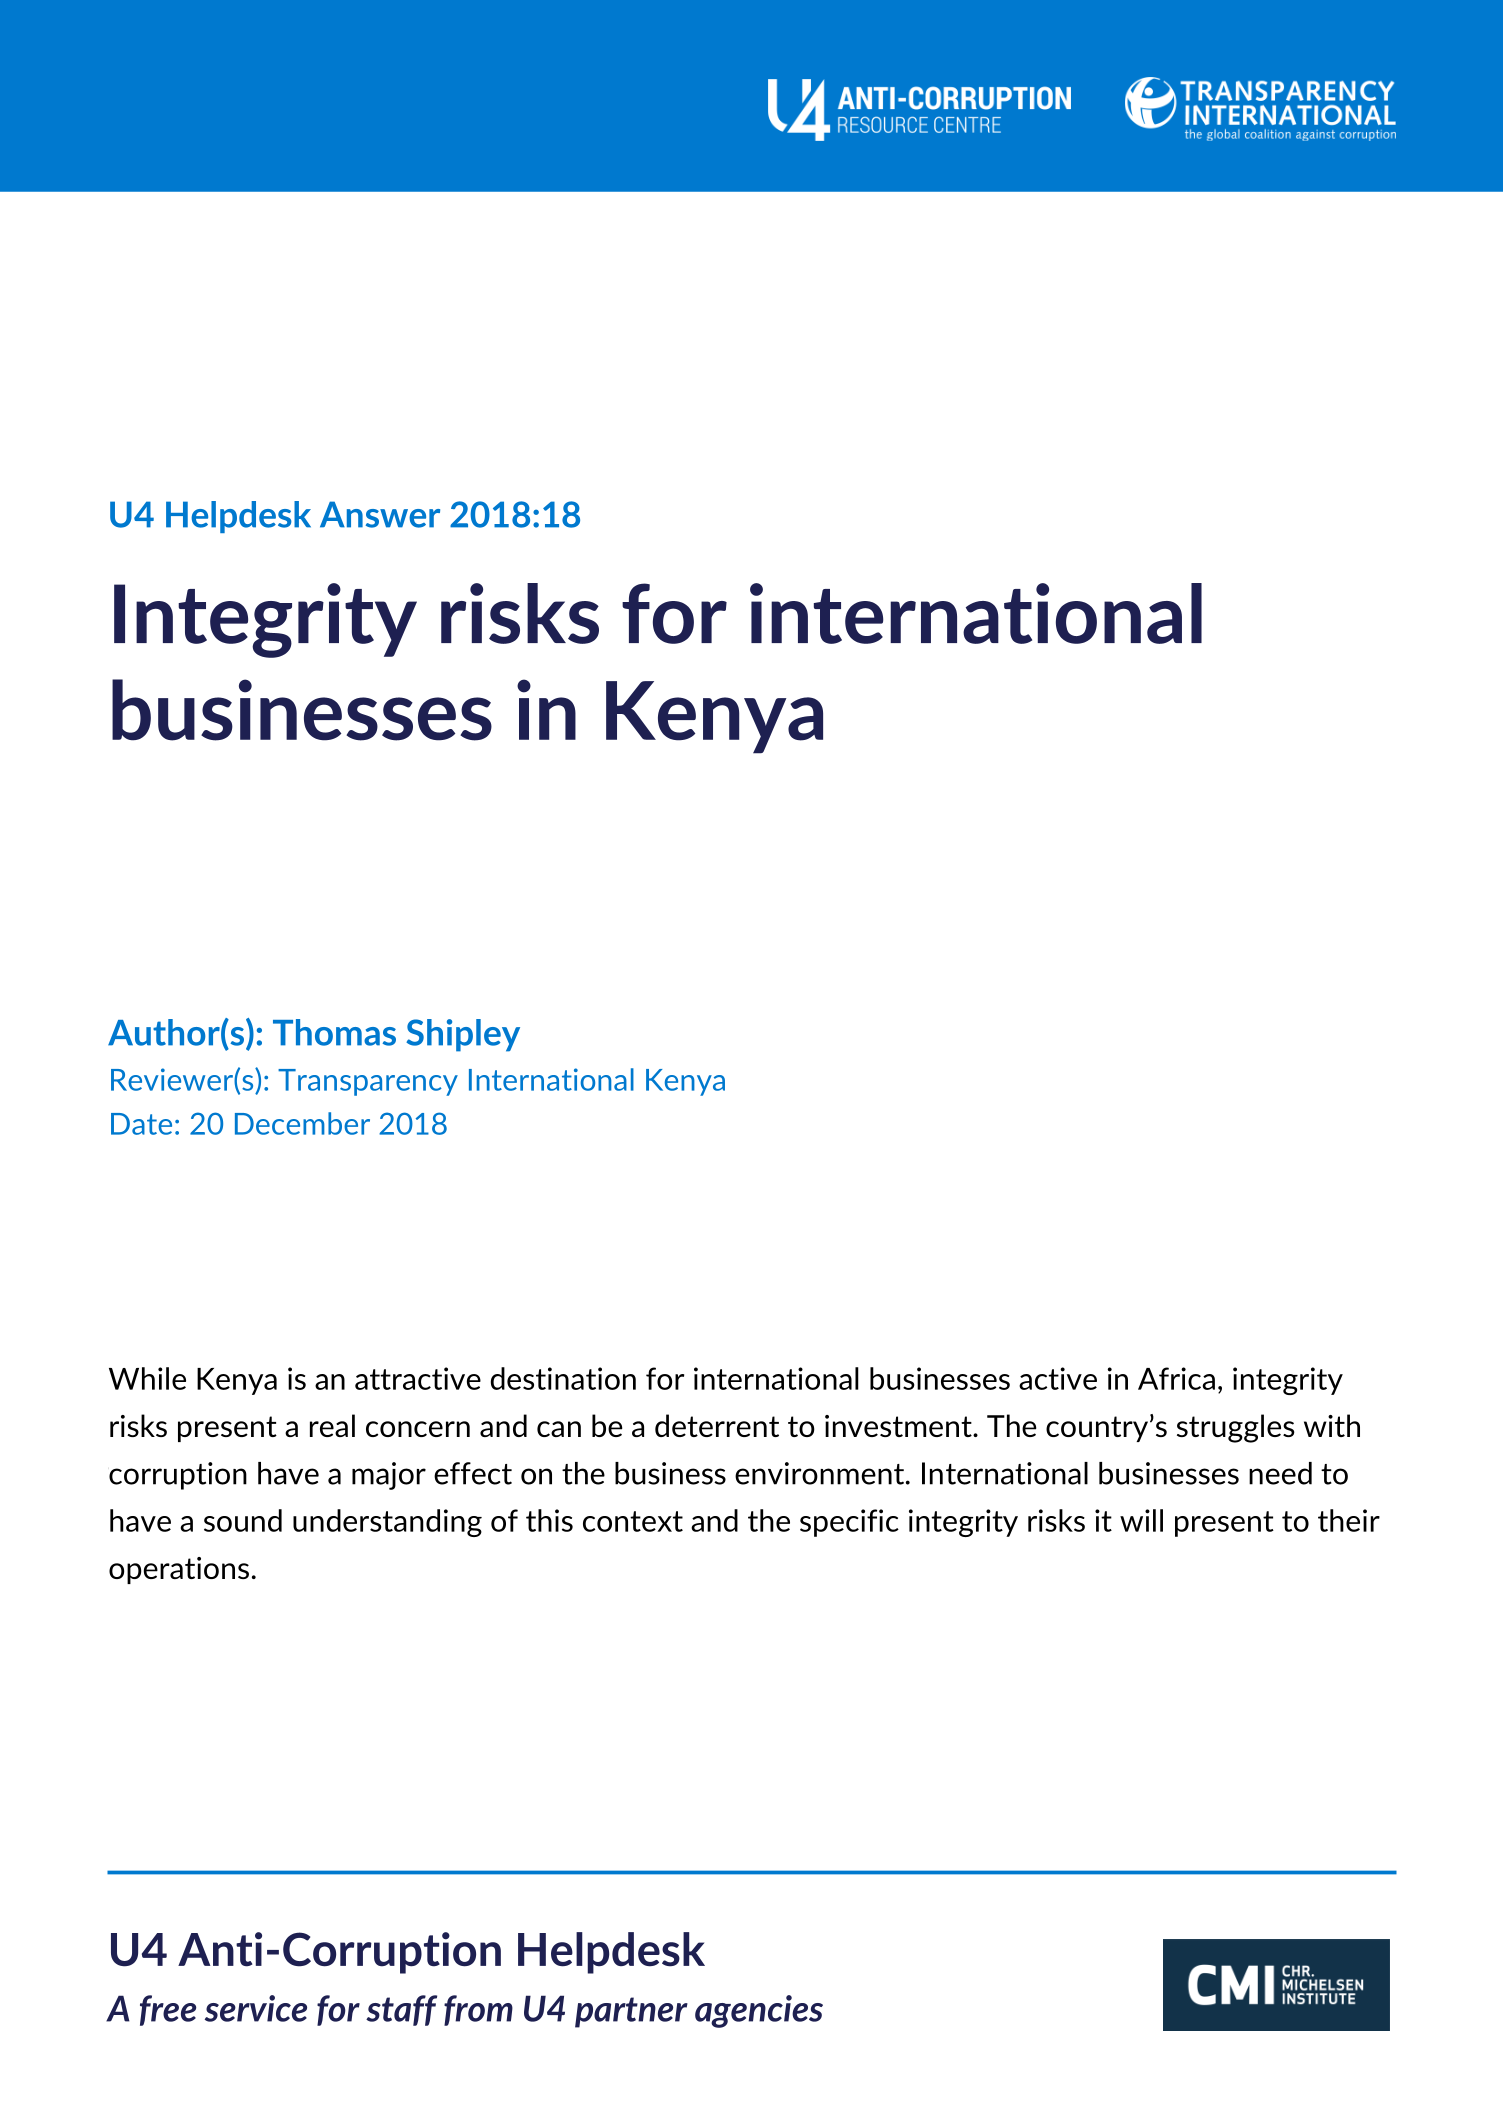 Integrity risks for international businesses in Kenya